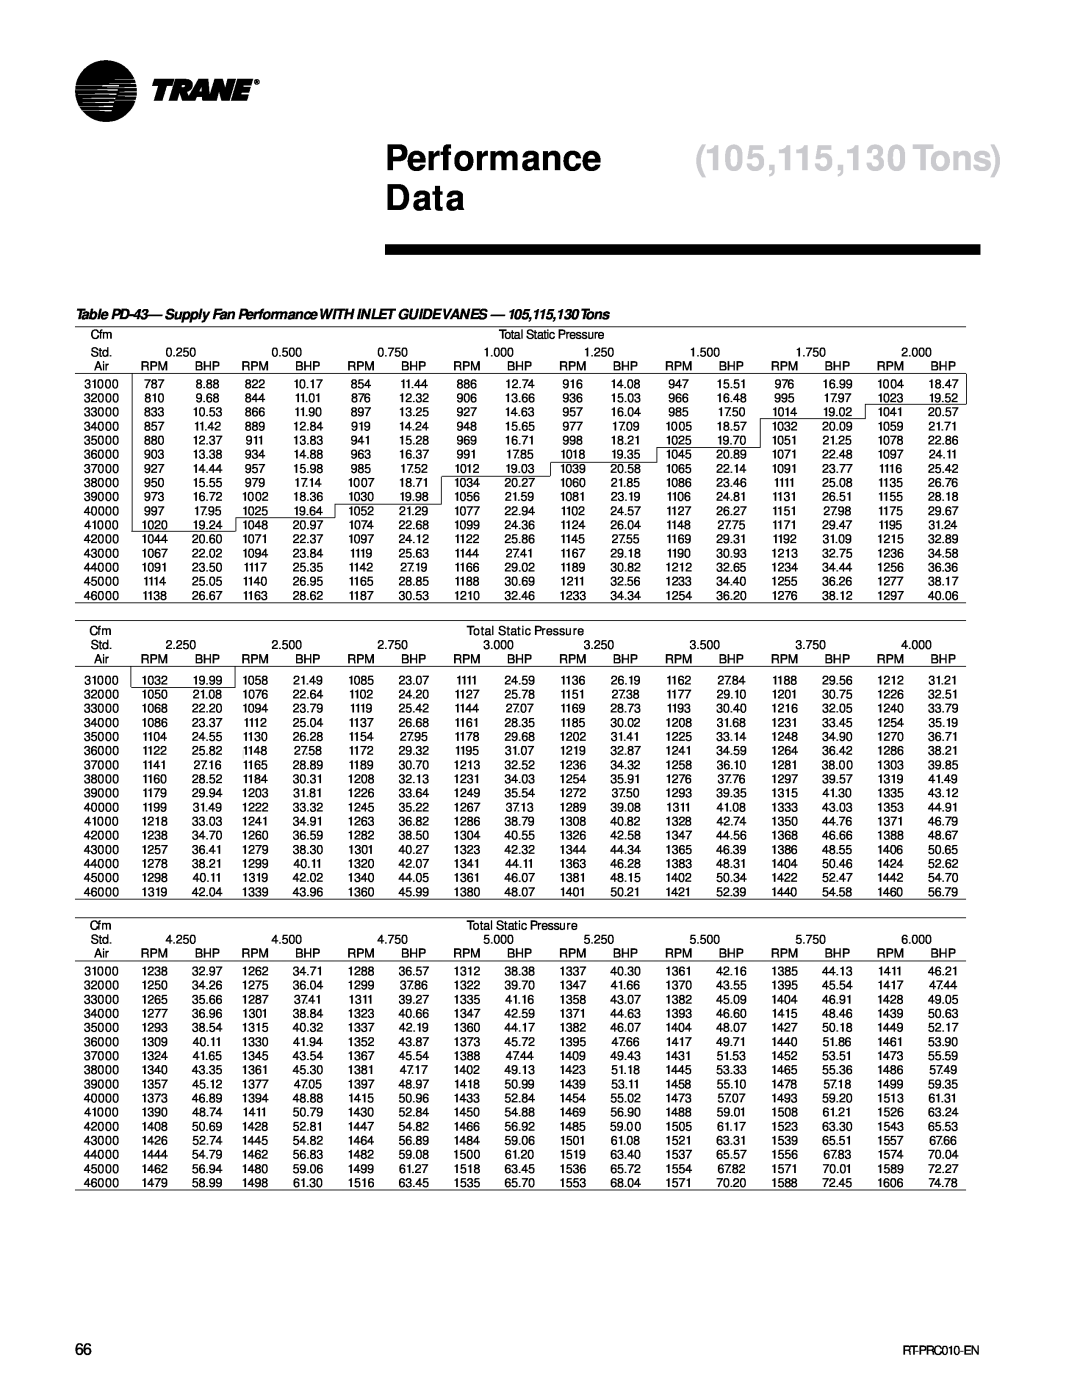 Trane RT-PRC010-EN manual Performance 105,115,130Tons, Data, 31000 